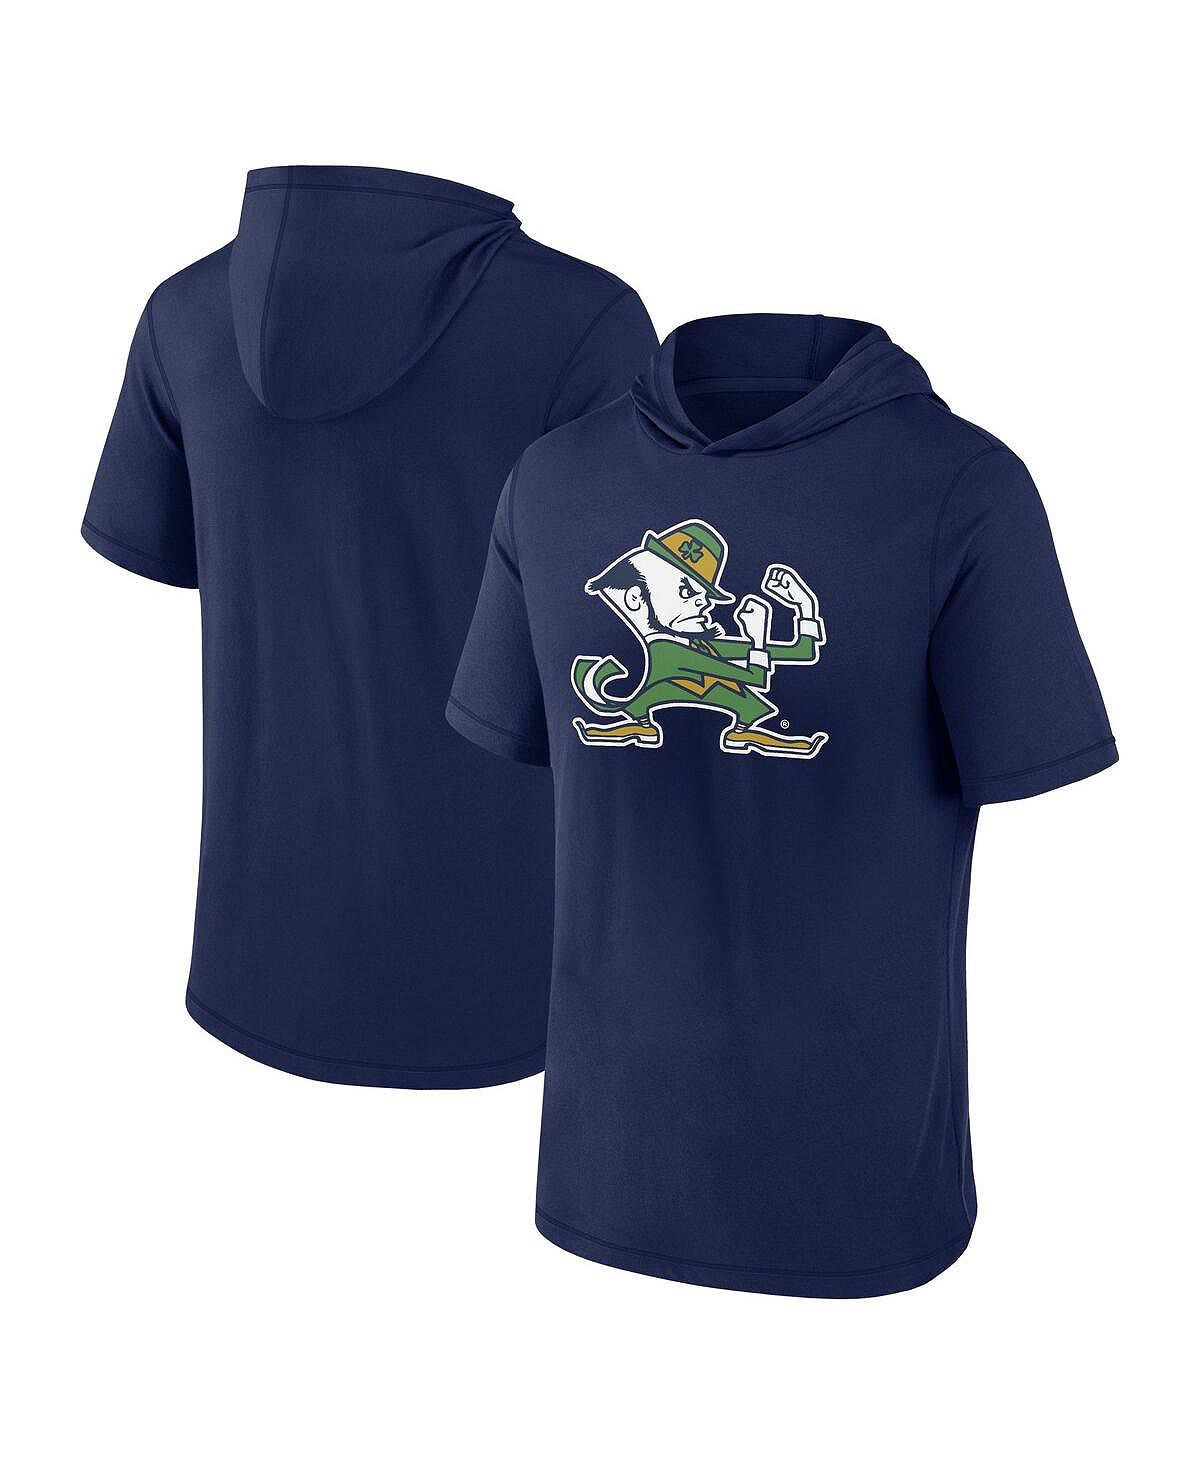 follett ken notre dame Мужская темно-синяя футболка с капюшоном с фирменным логотипом Notre Dame Fighting Irish Primary Fanatics